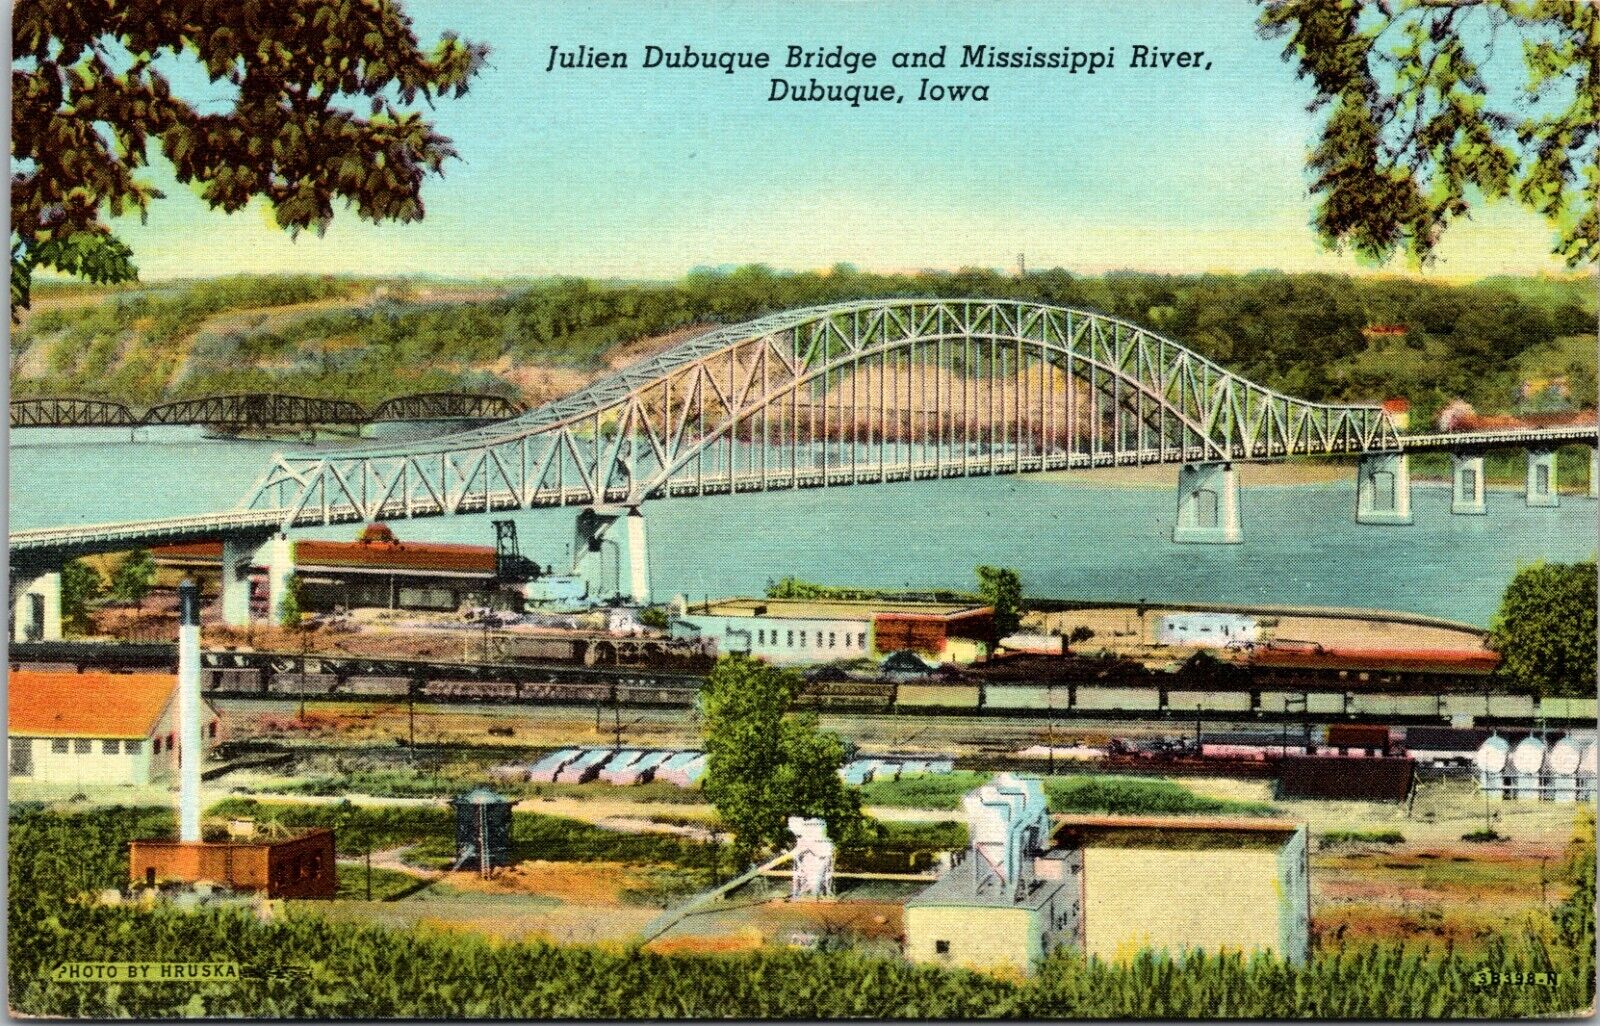 Julien Dubuque Bridge And Mississippi River Dubuque Iowa Chrome post Card